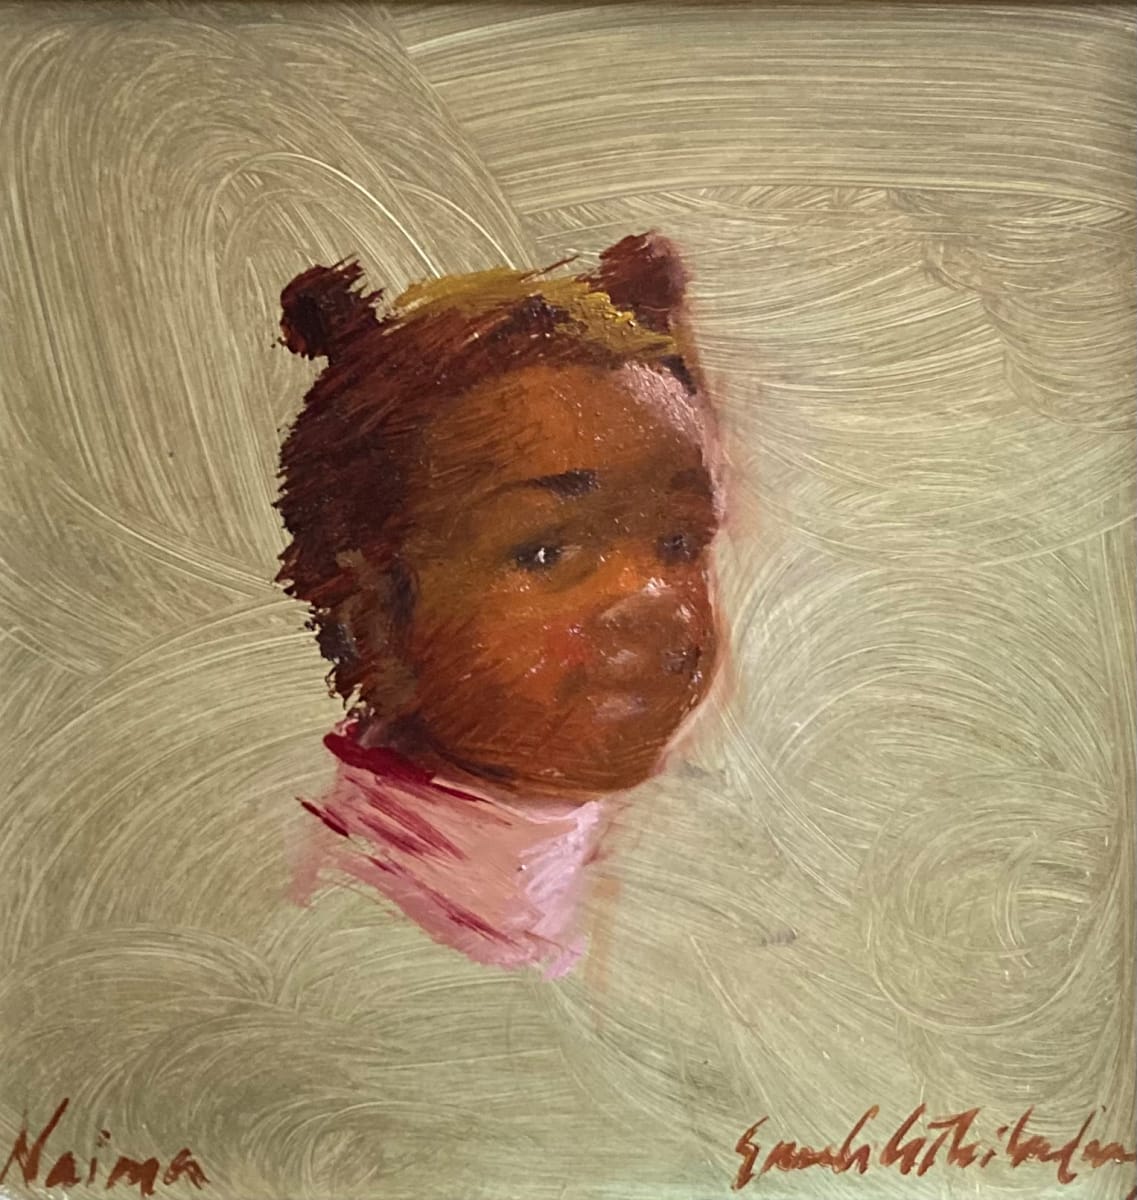 Portrait of Naima by Sarah Griffin Thibodeaux 